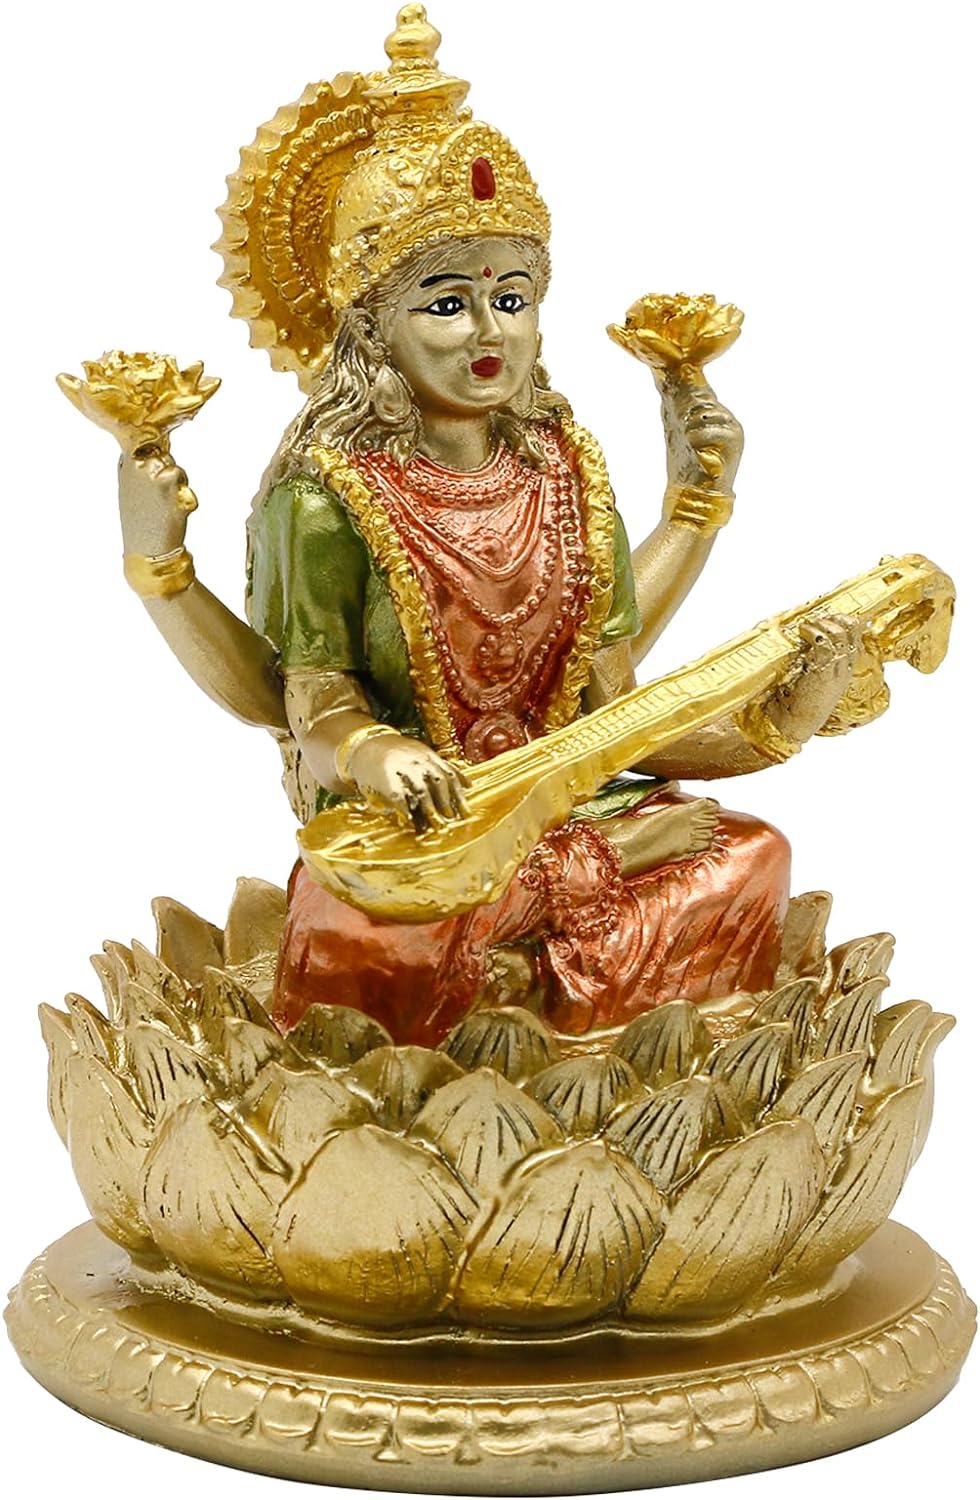 alikiki 6.5 H Sarswati Sitting on Lotus Figurines in Antique Gold Hindu God Staute for Home Office Mandir Altar Pooja Item Indian Saraswati Idol Statue for Diwali Puja Gifts